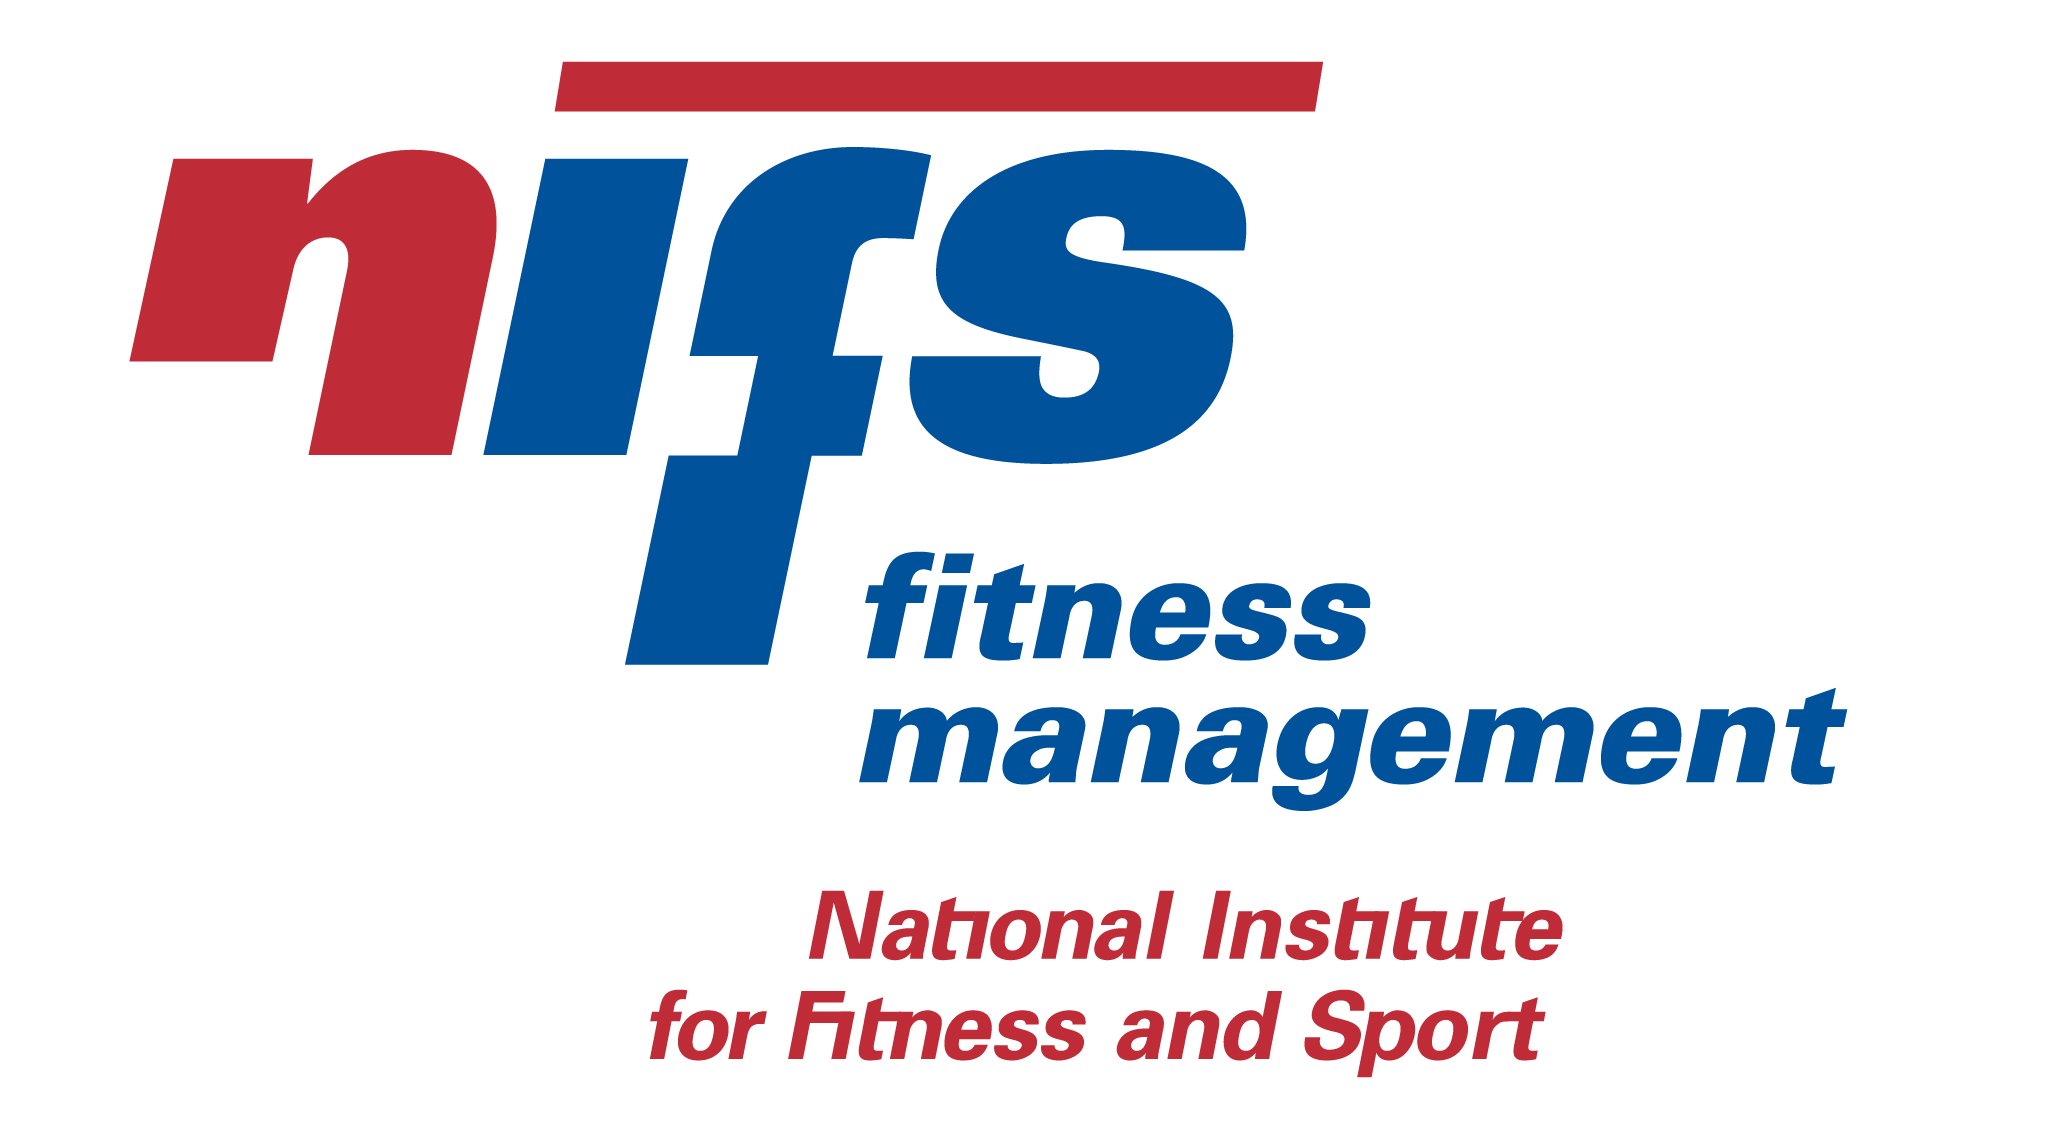 NIFS_fitness management_name